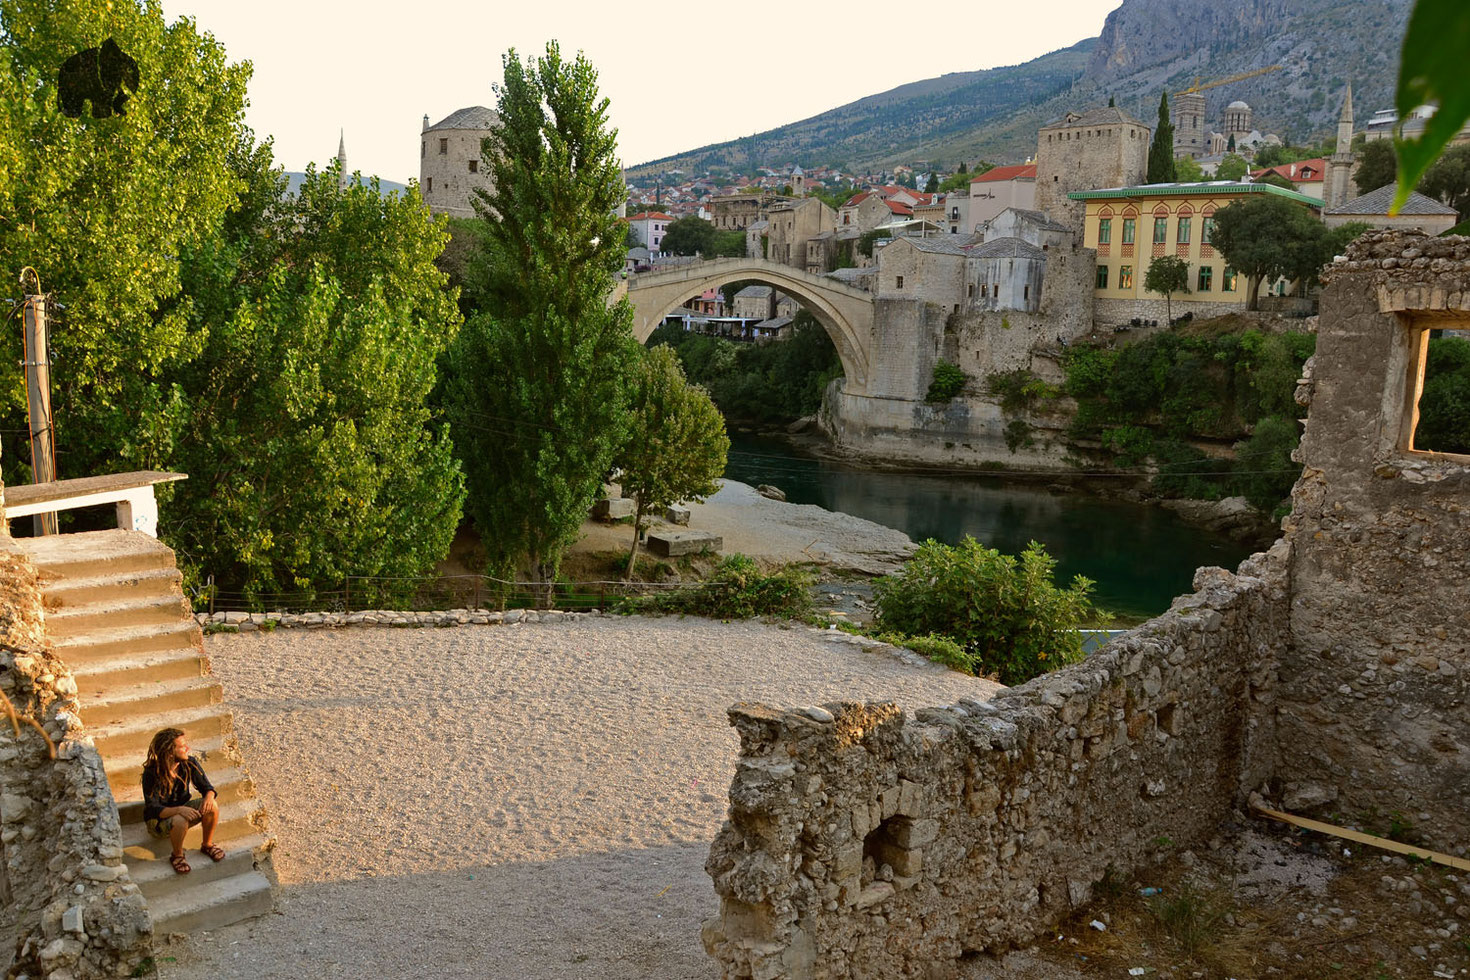 Mostar, Bosnia & Herzegovina